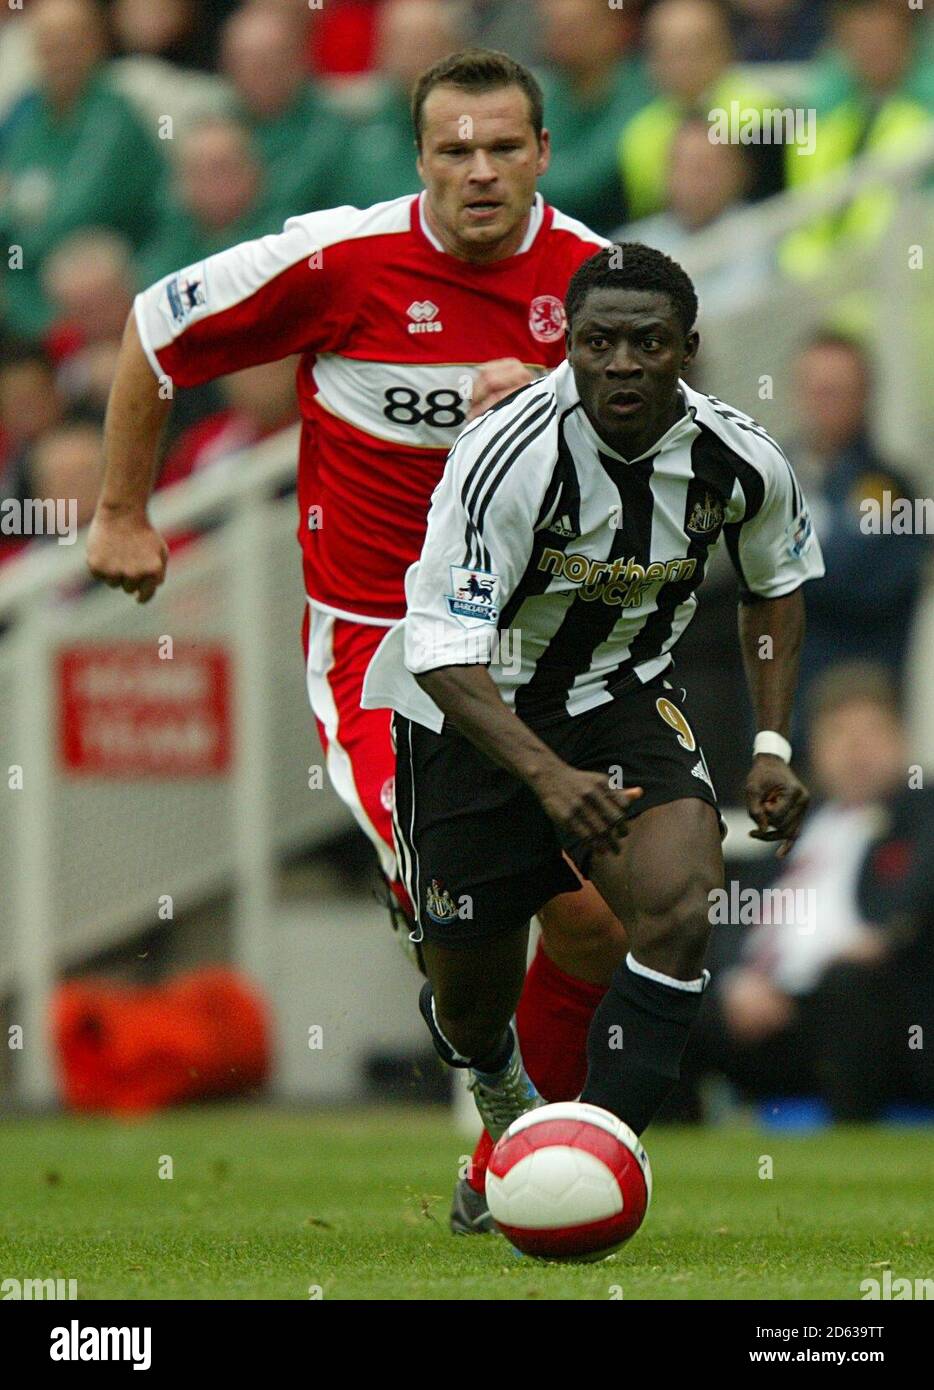 Middlesbrough's Mark Viduka chases Newcastle United's Obafemi Martins for the ball Stock Photo